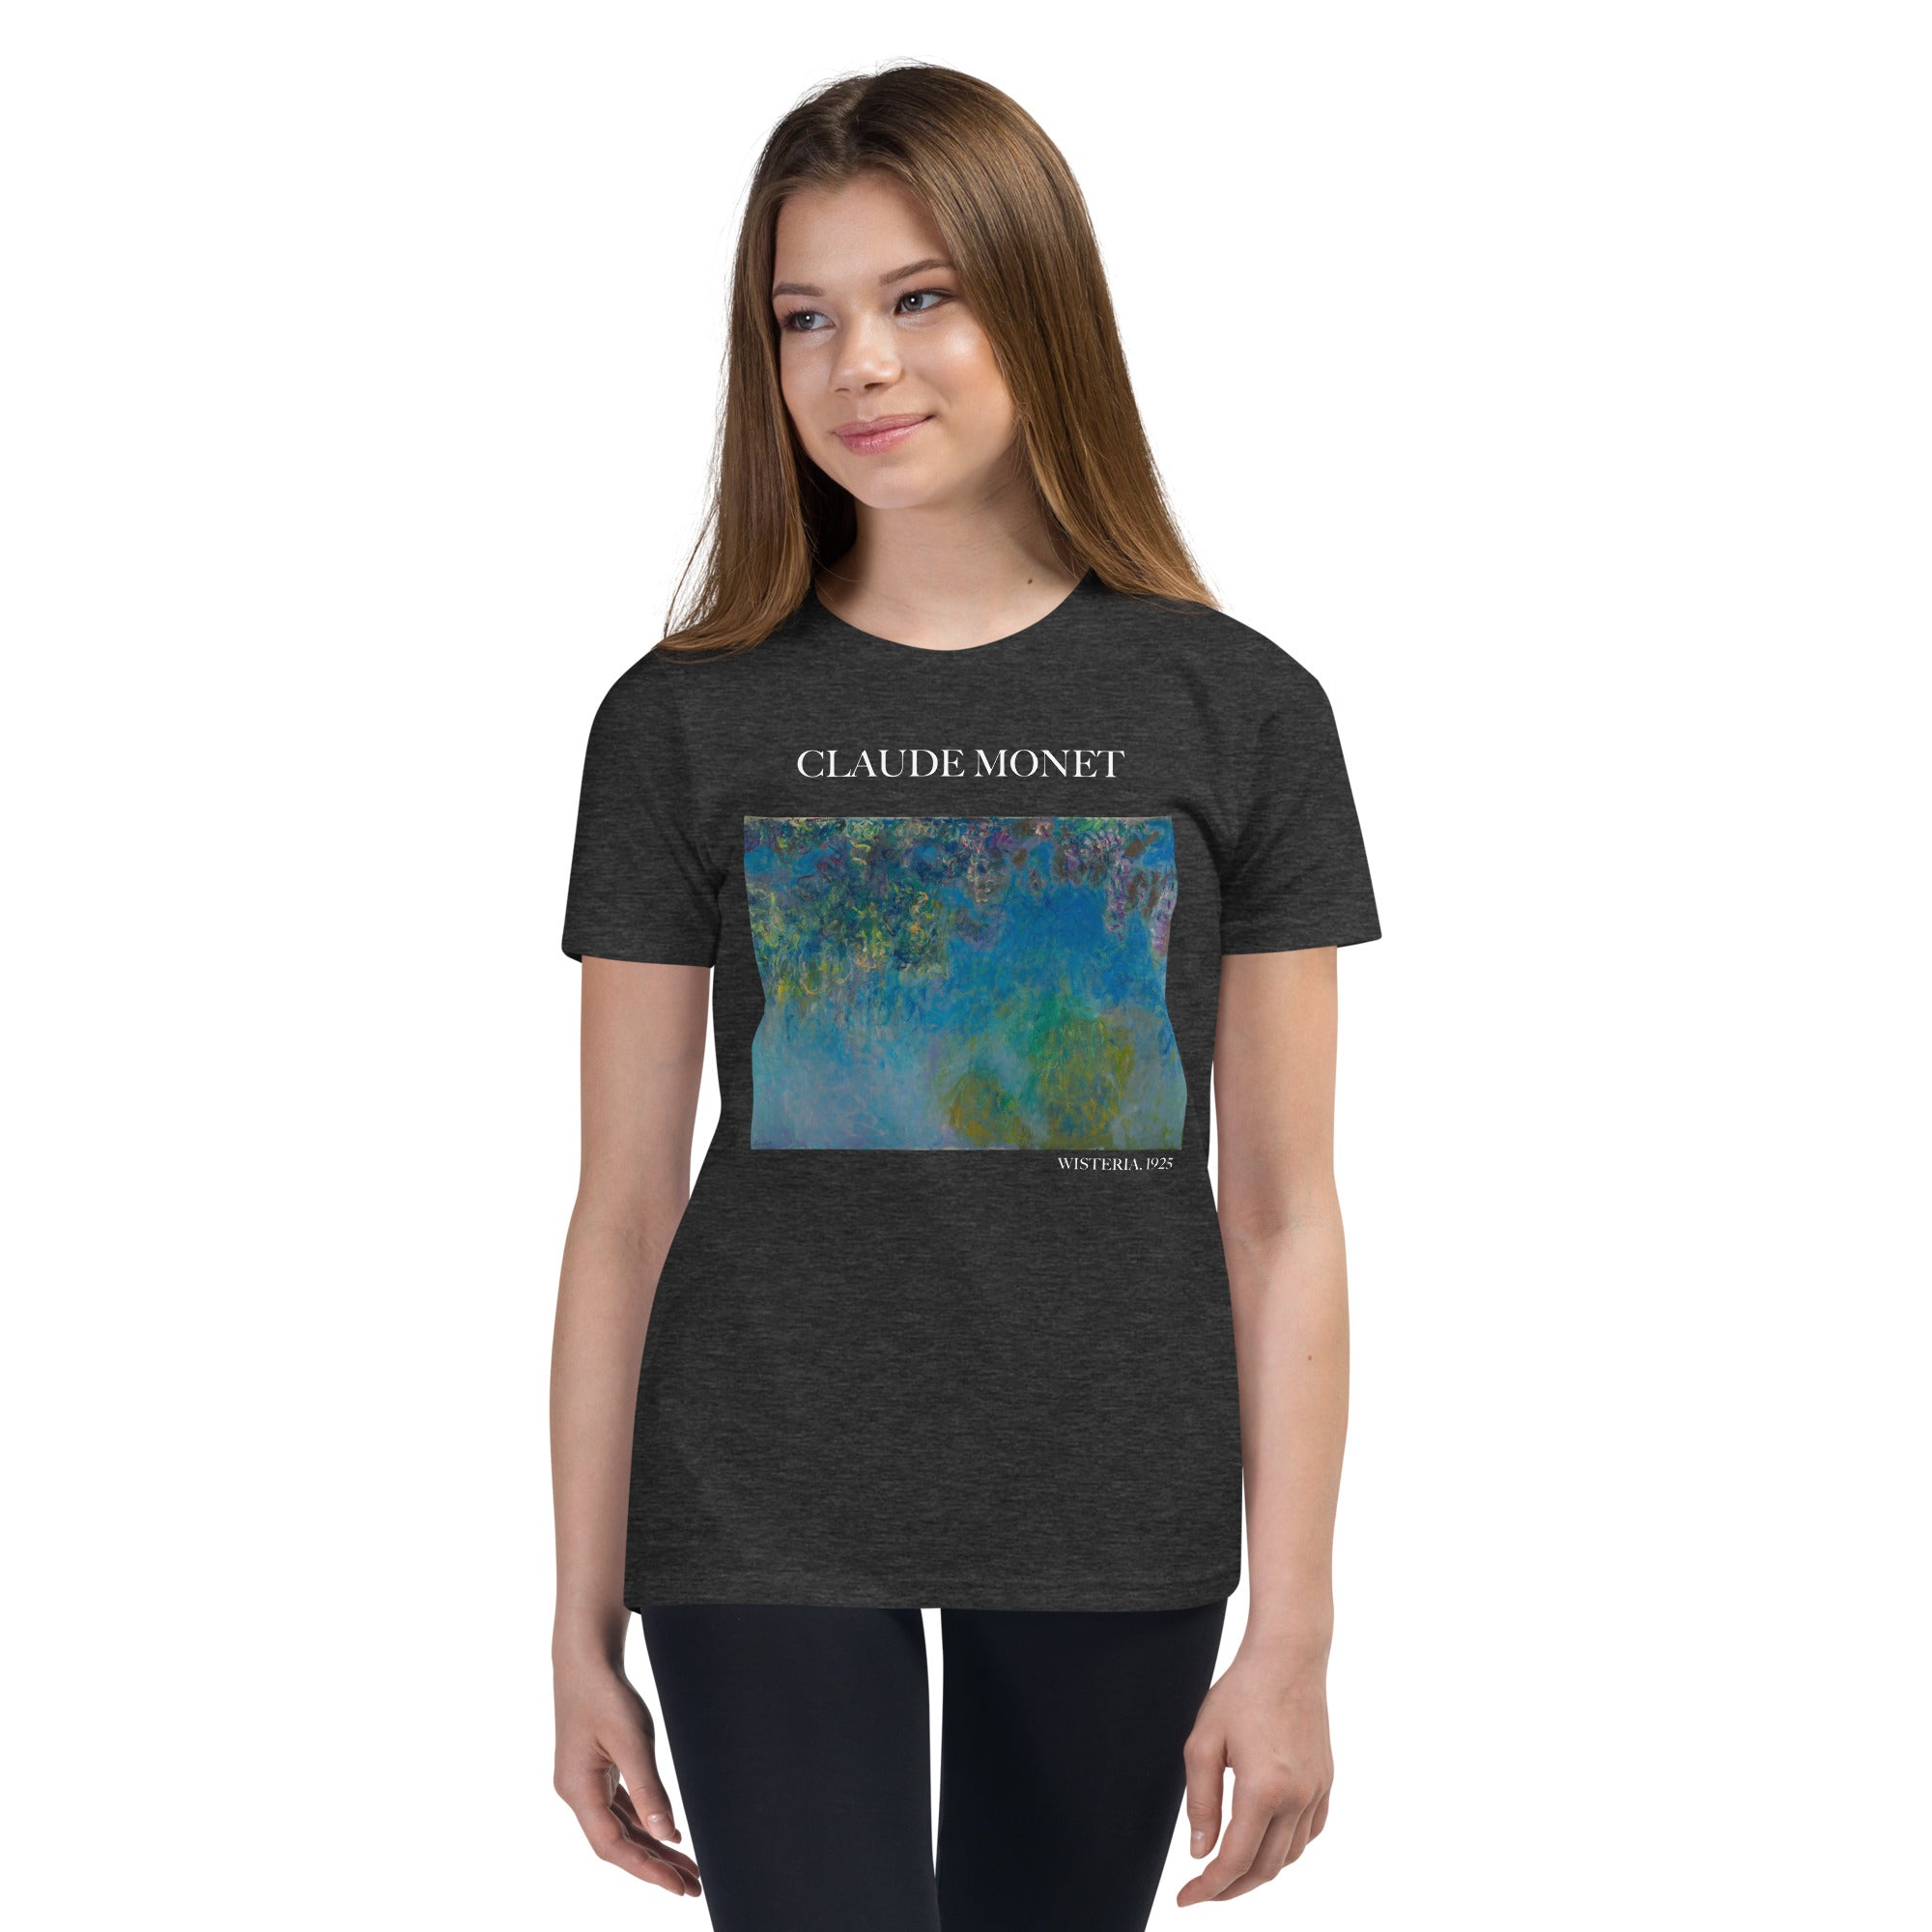 Claude Monet 'Wisteria' Famous Painting Short Sleeve T-Shirt | Premium Youth Art Tee